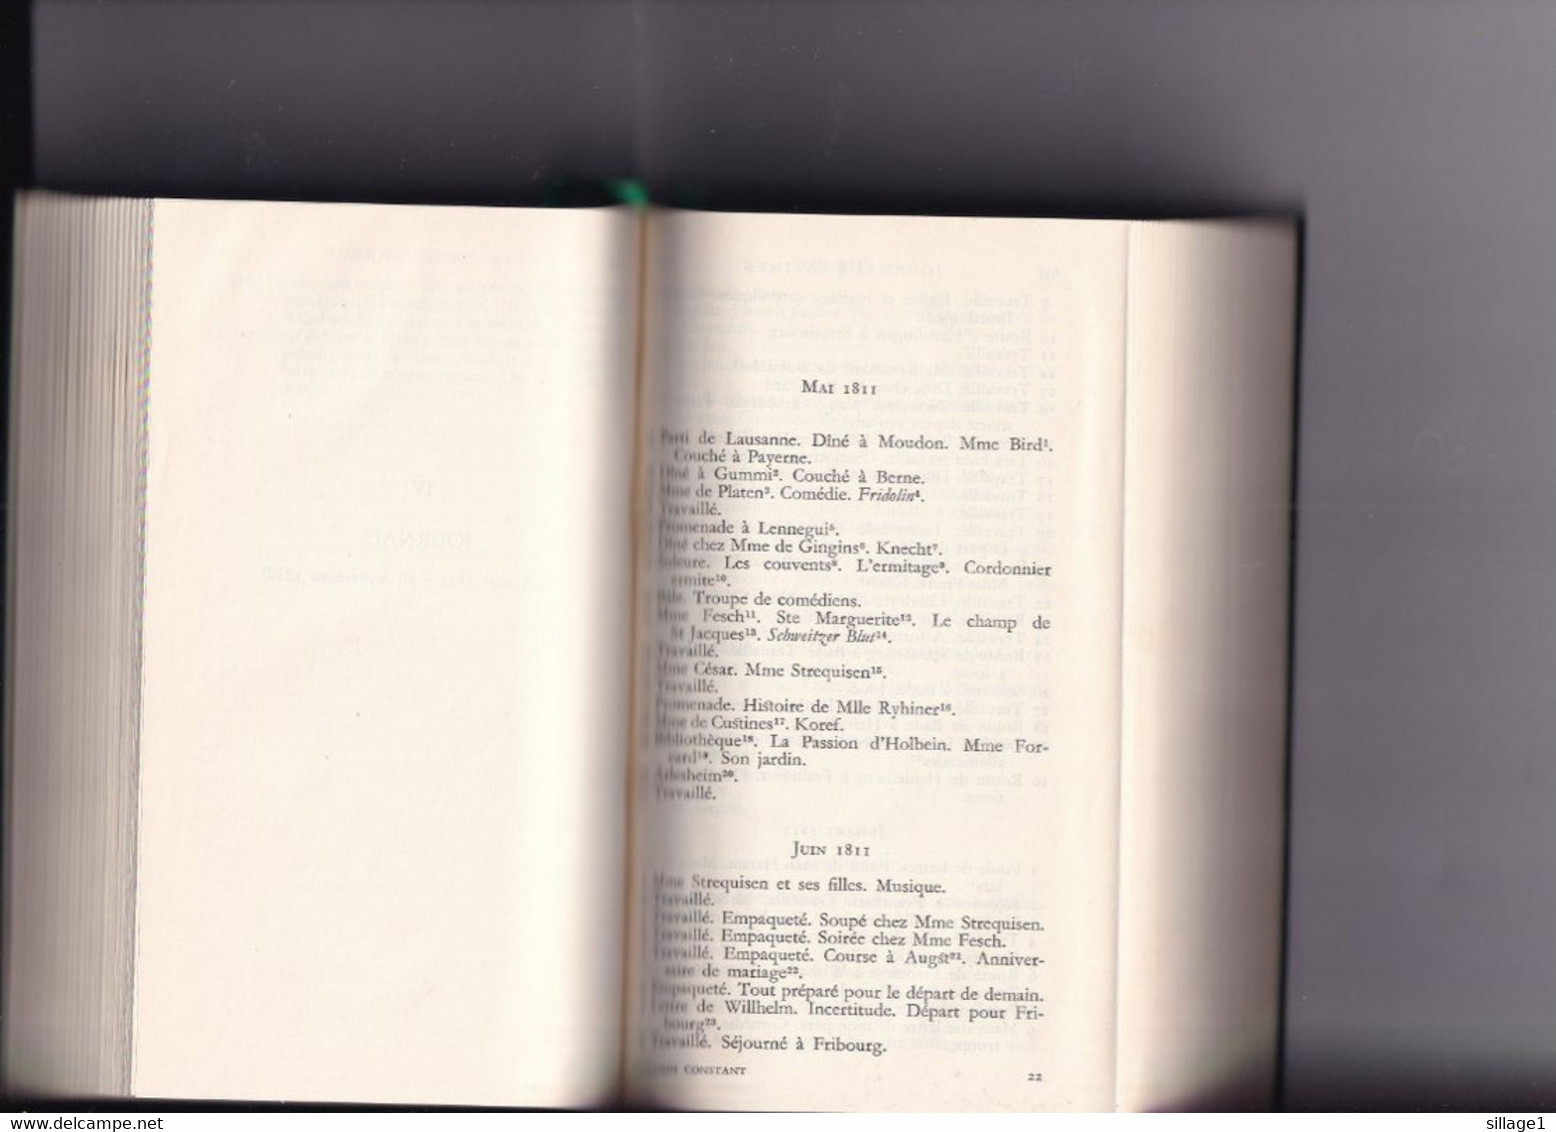 Benjamin CONSTANT Oeuvres La bibliothèque de la Pléiade NRF 1964 TBE Rare N°123 de la Bibliothèque jaquette et livre